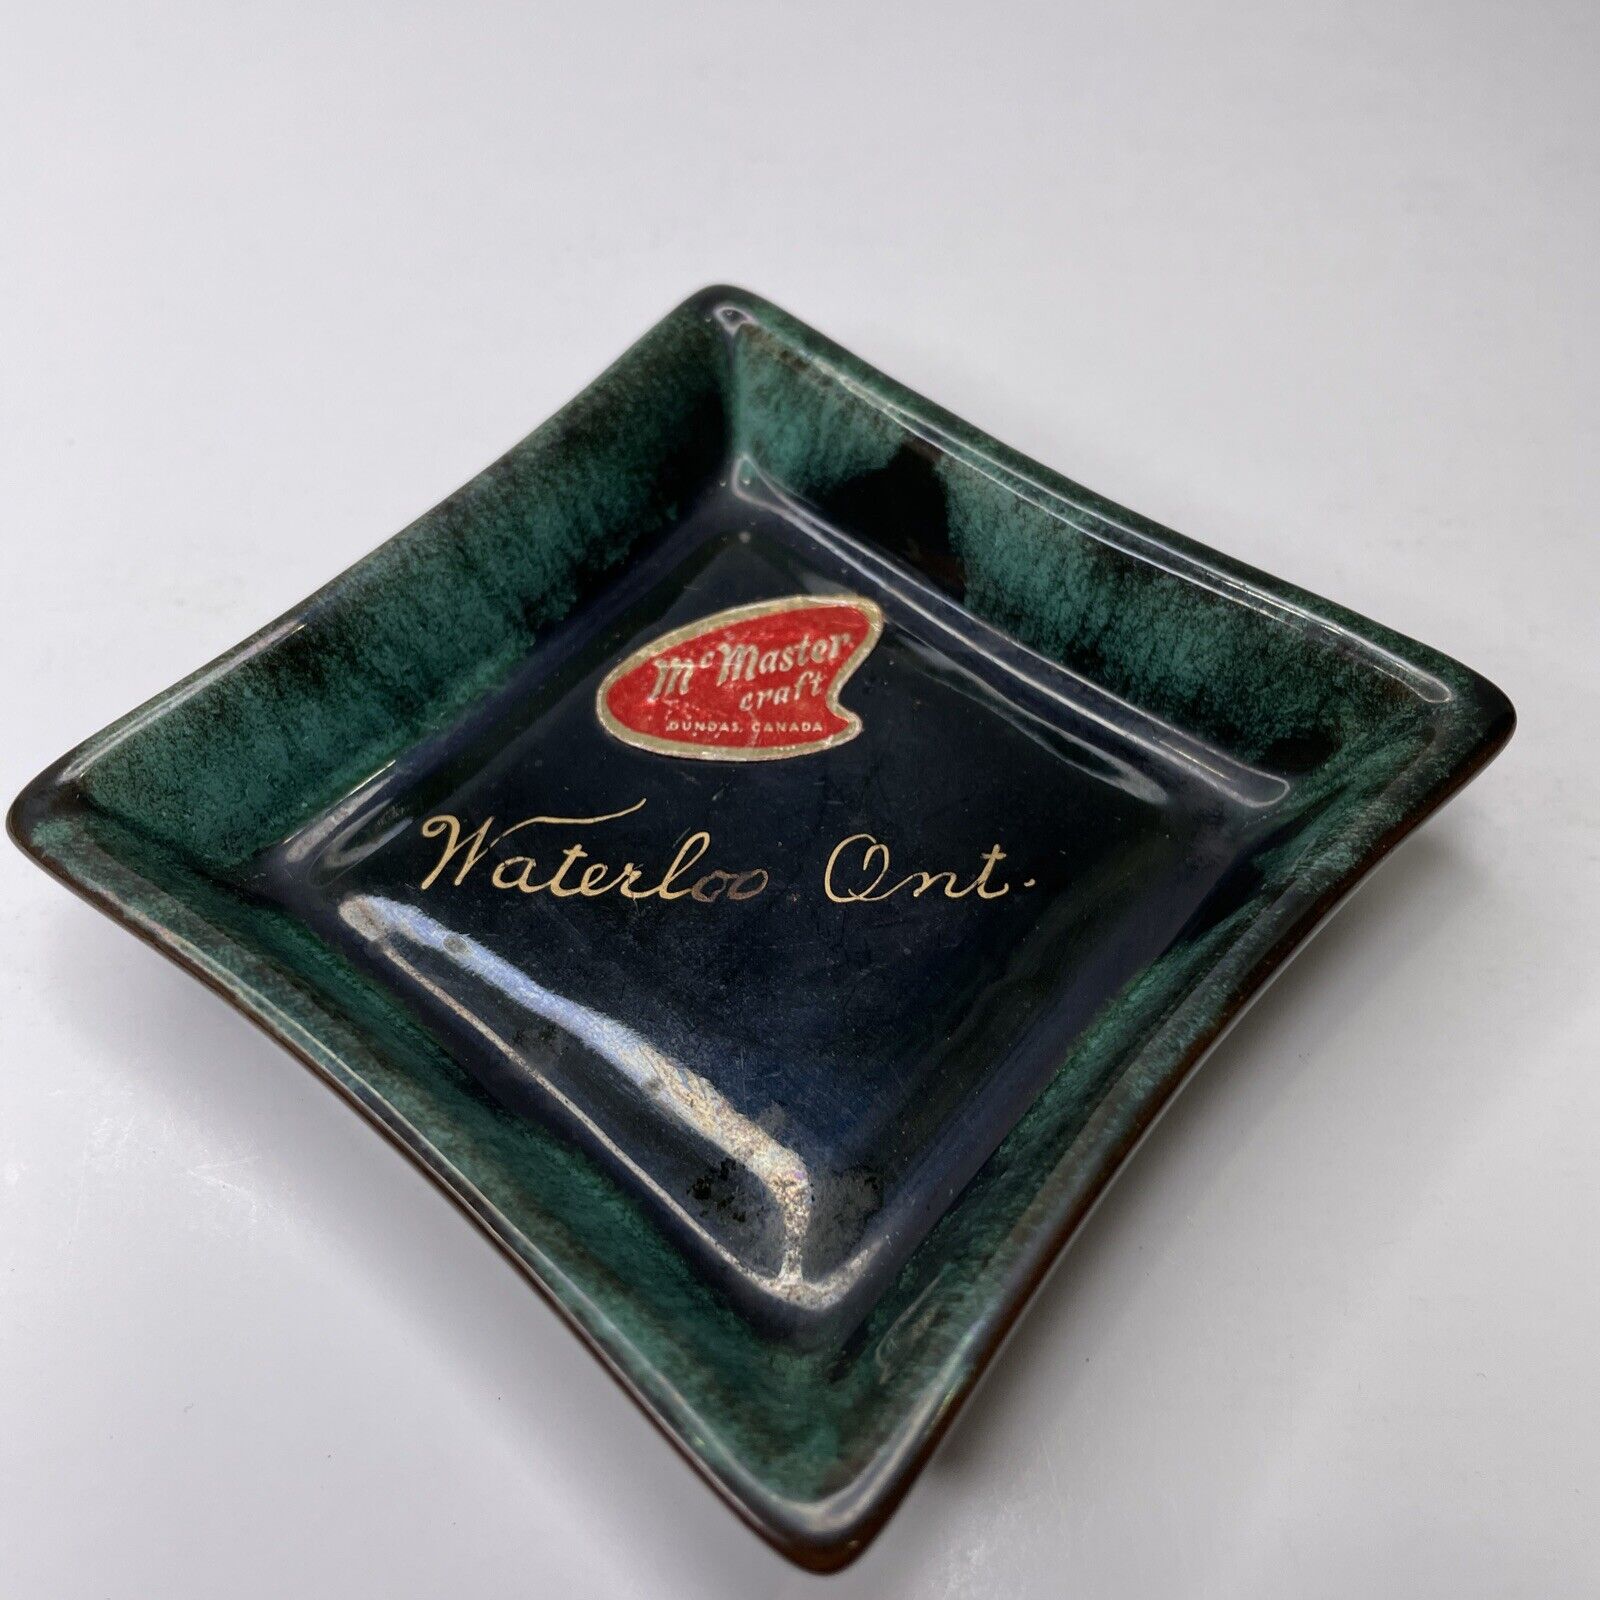 RARE Vintage 1950’s McMaster Craft of Dundas Ontario Thick Pottery Ashtray